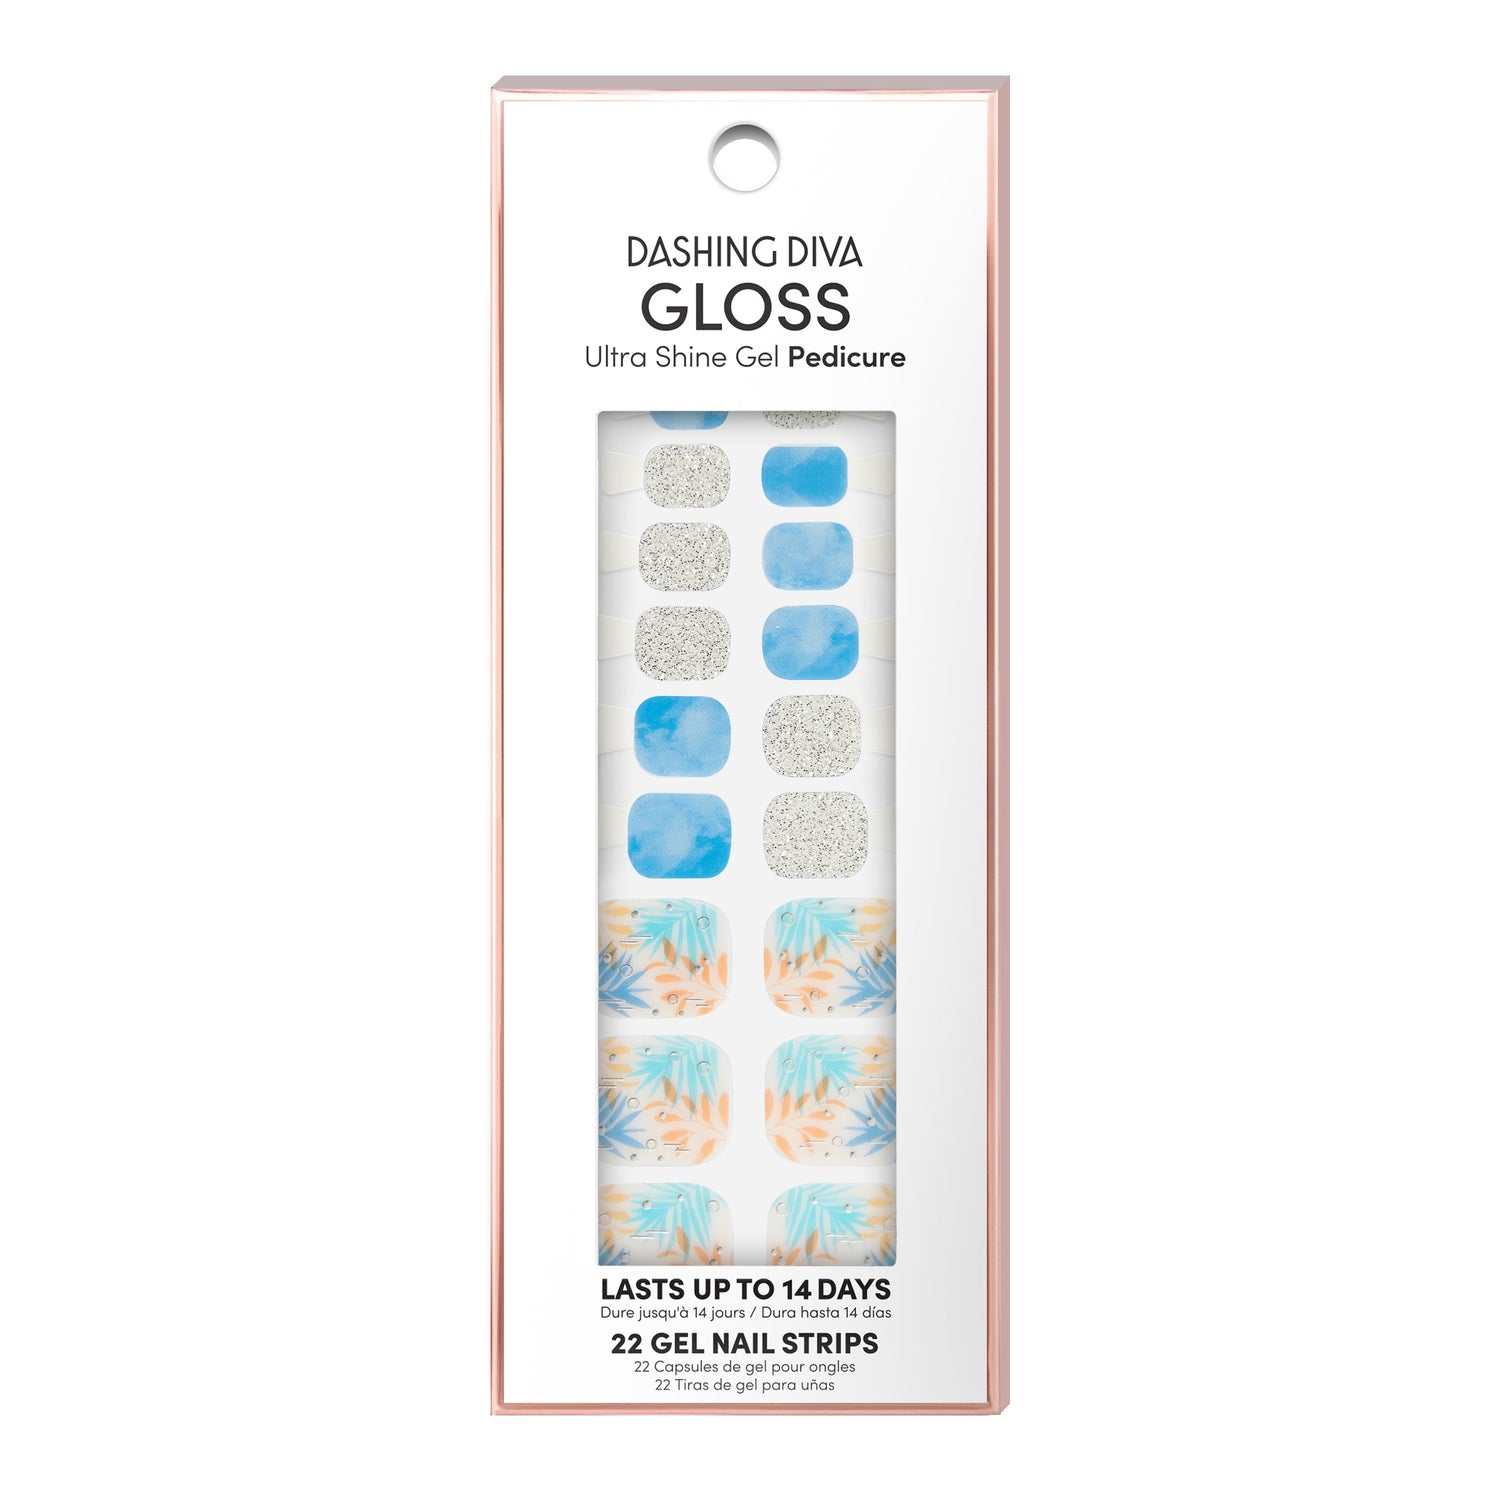 Dashing Diva GLOSS Pedicure blue and silver glitter gel pedi strips with multi color palm leaf print.